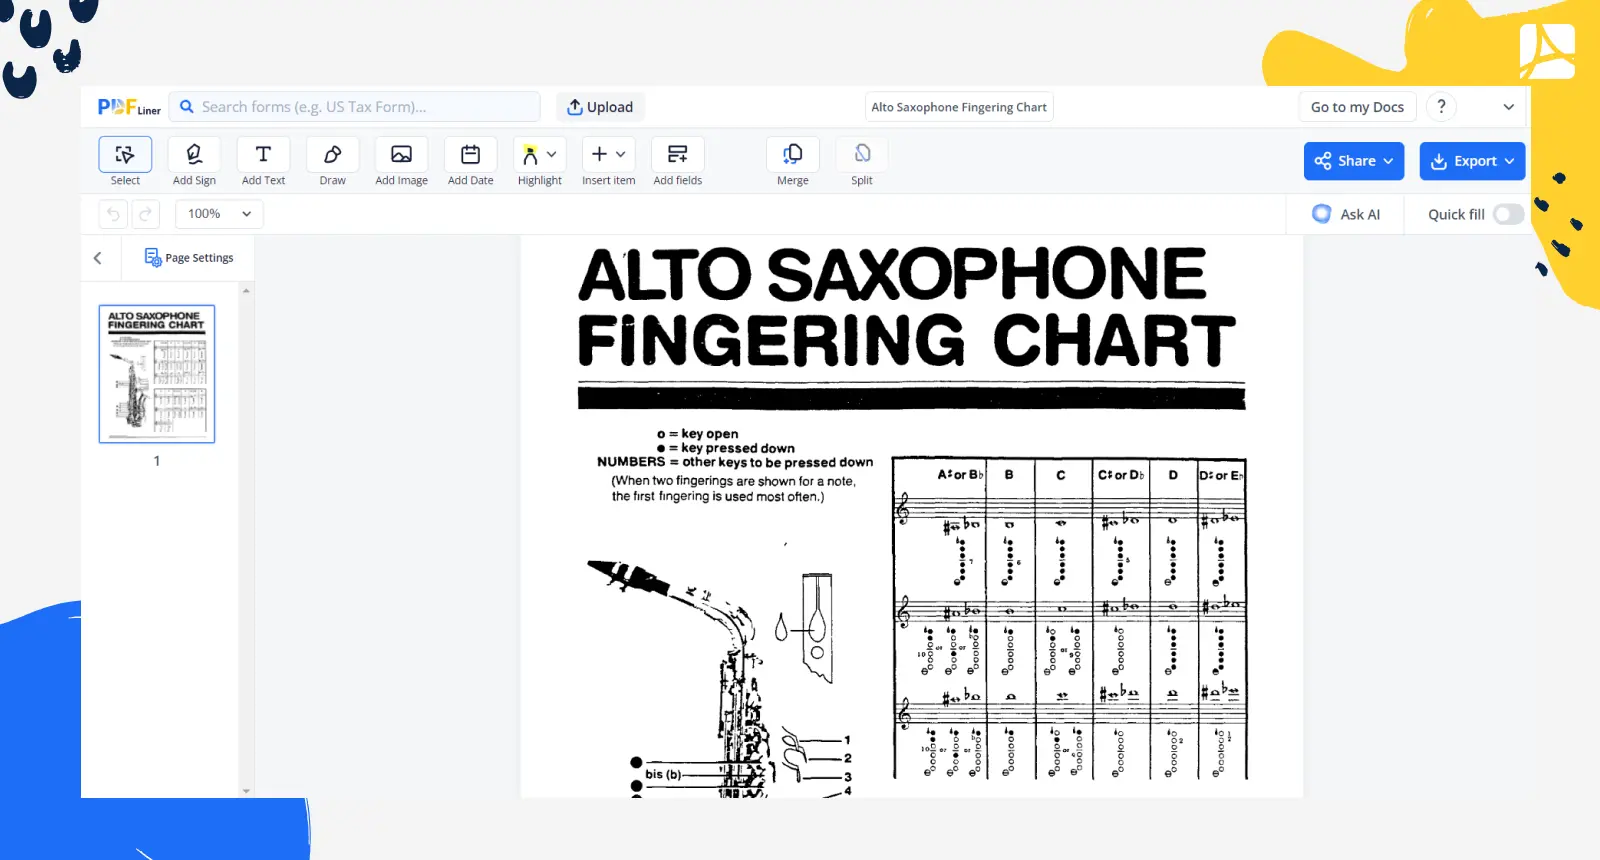 Alto Saxophone Fingering Chart Screenshot